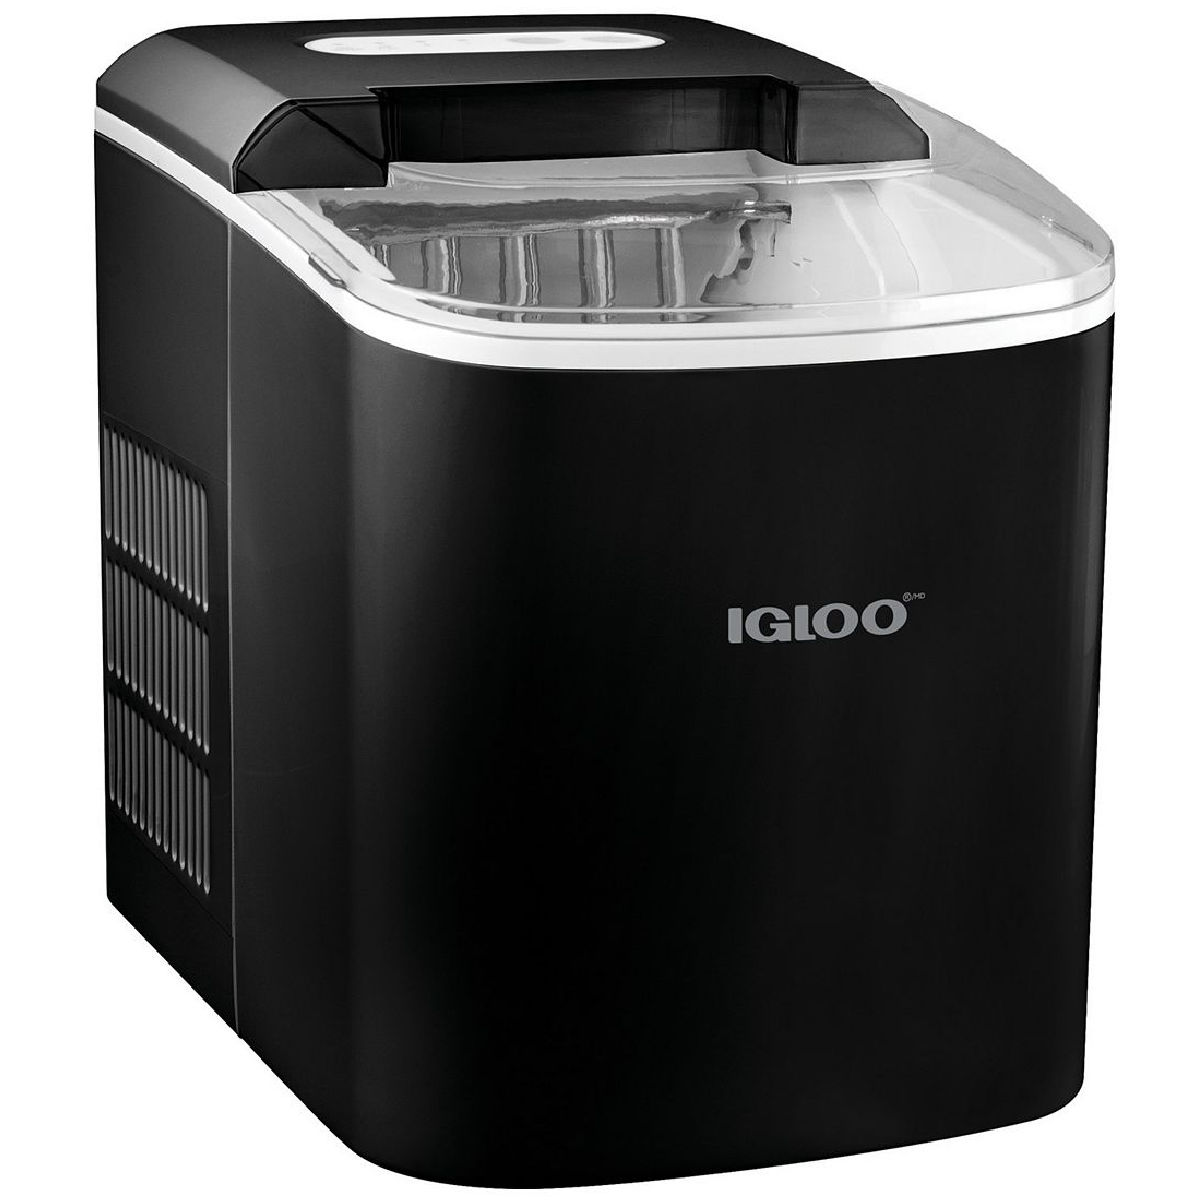 Igloo Automatic Portable Countertop Ice Maker